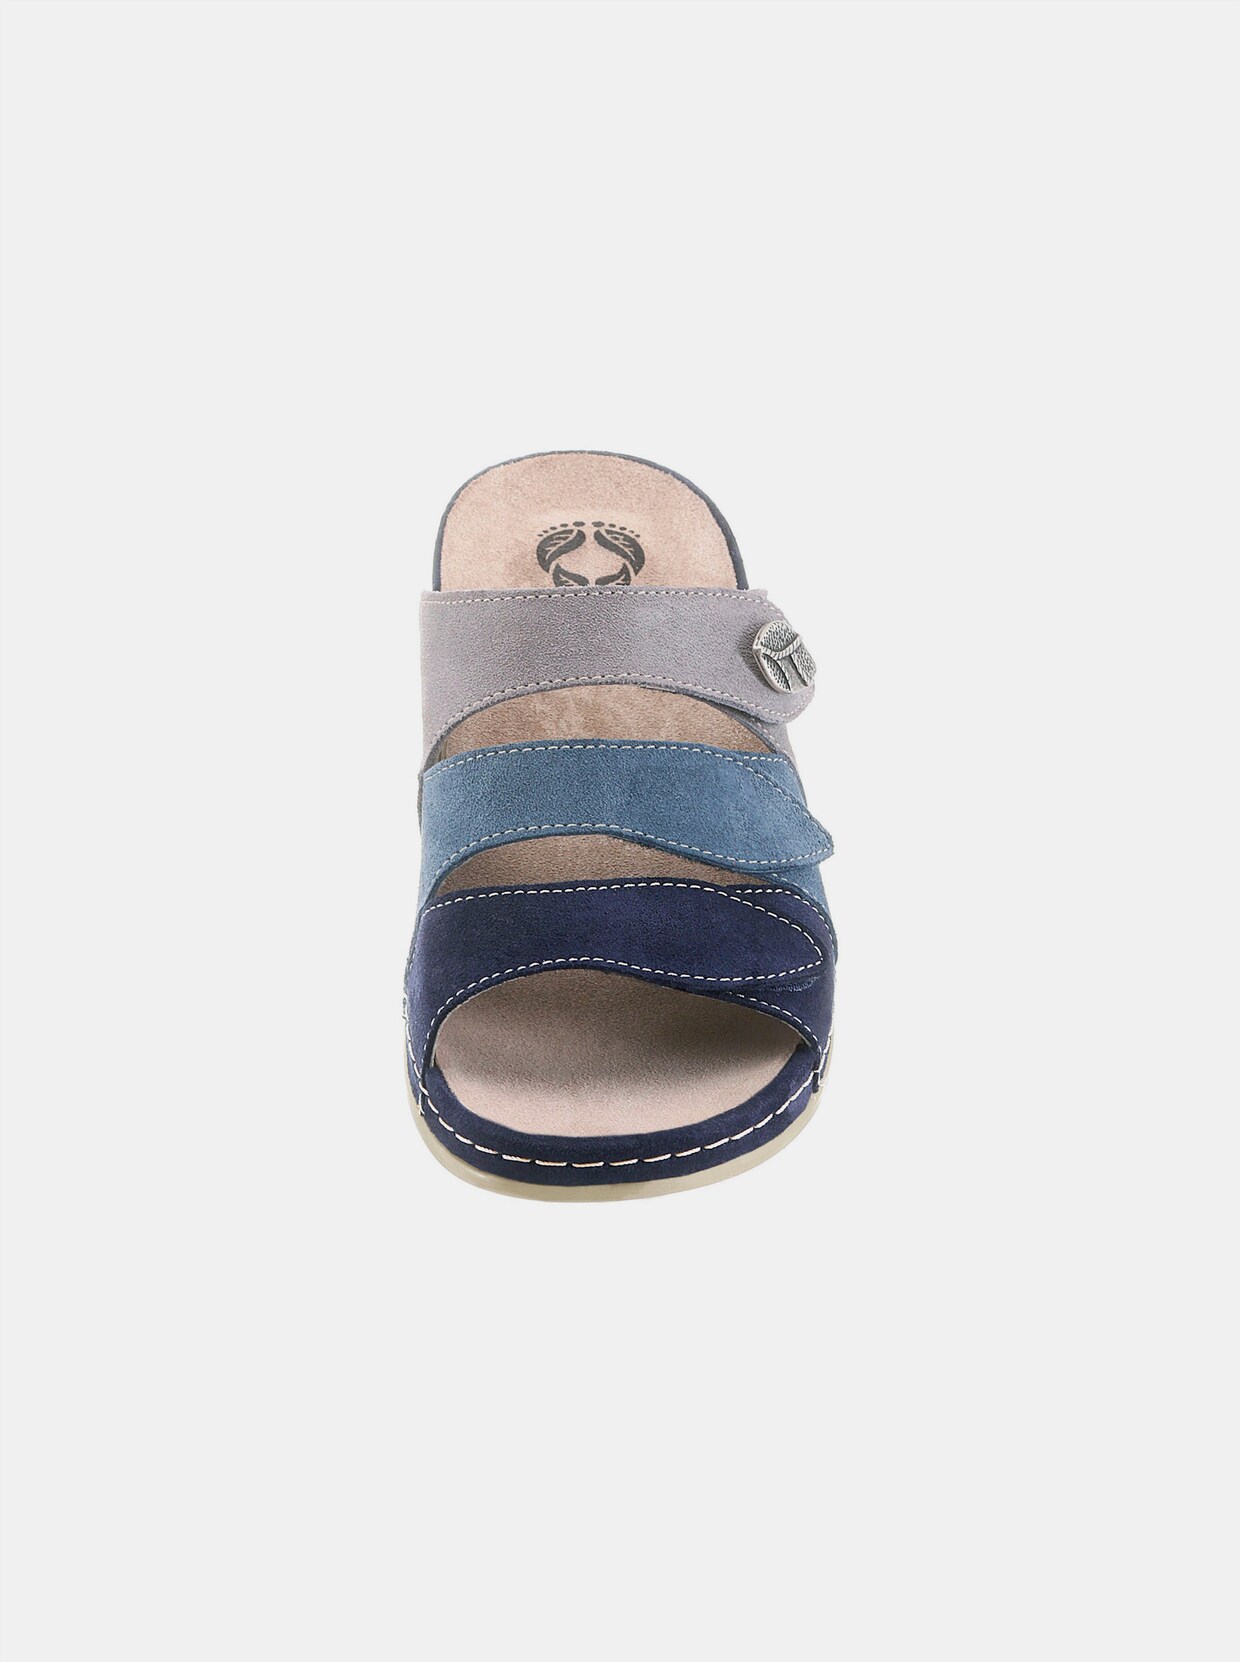 Mubb slippers - blauw/grijs